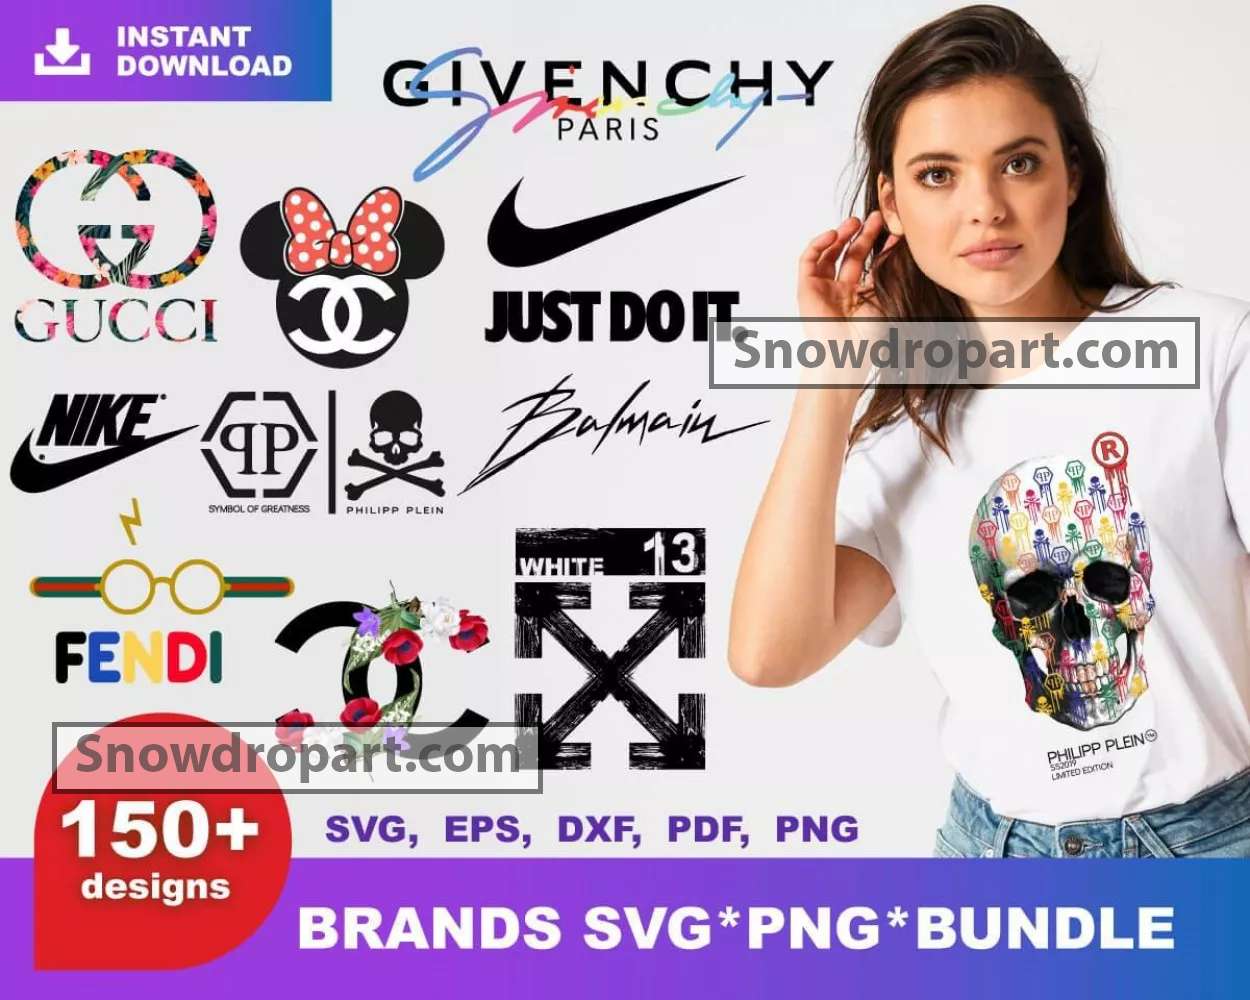 Gucci Logo SVG Digital File, Gucci Svg, Fashion Luxury Brand Svg